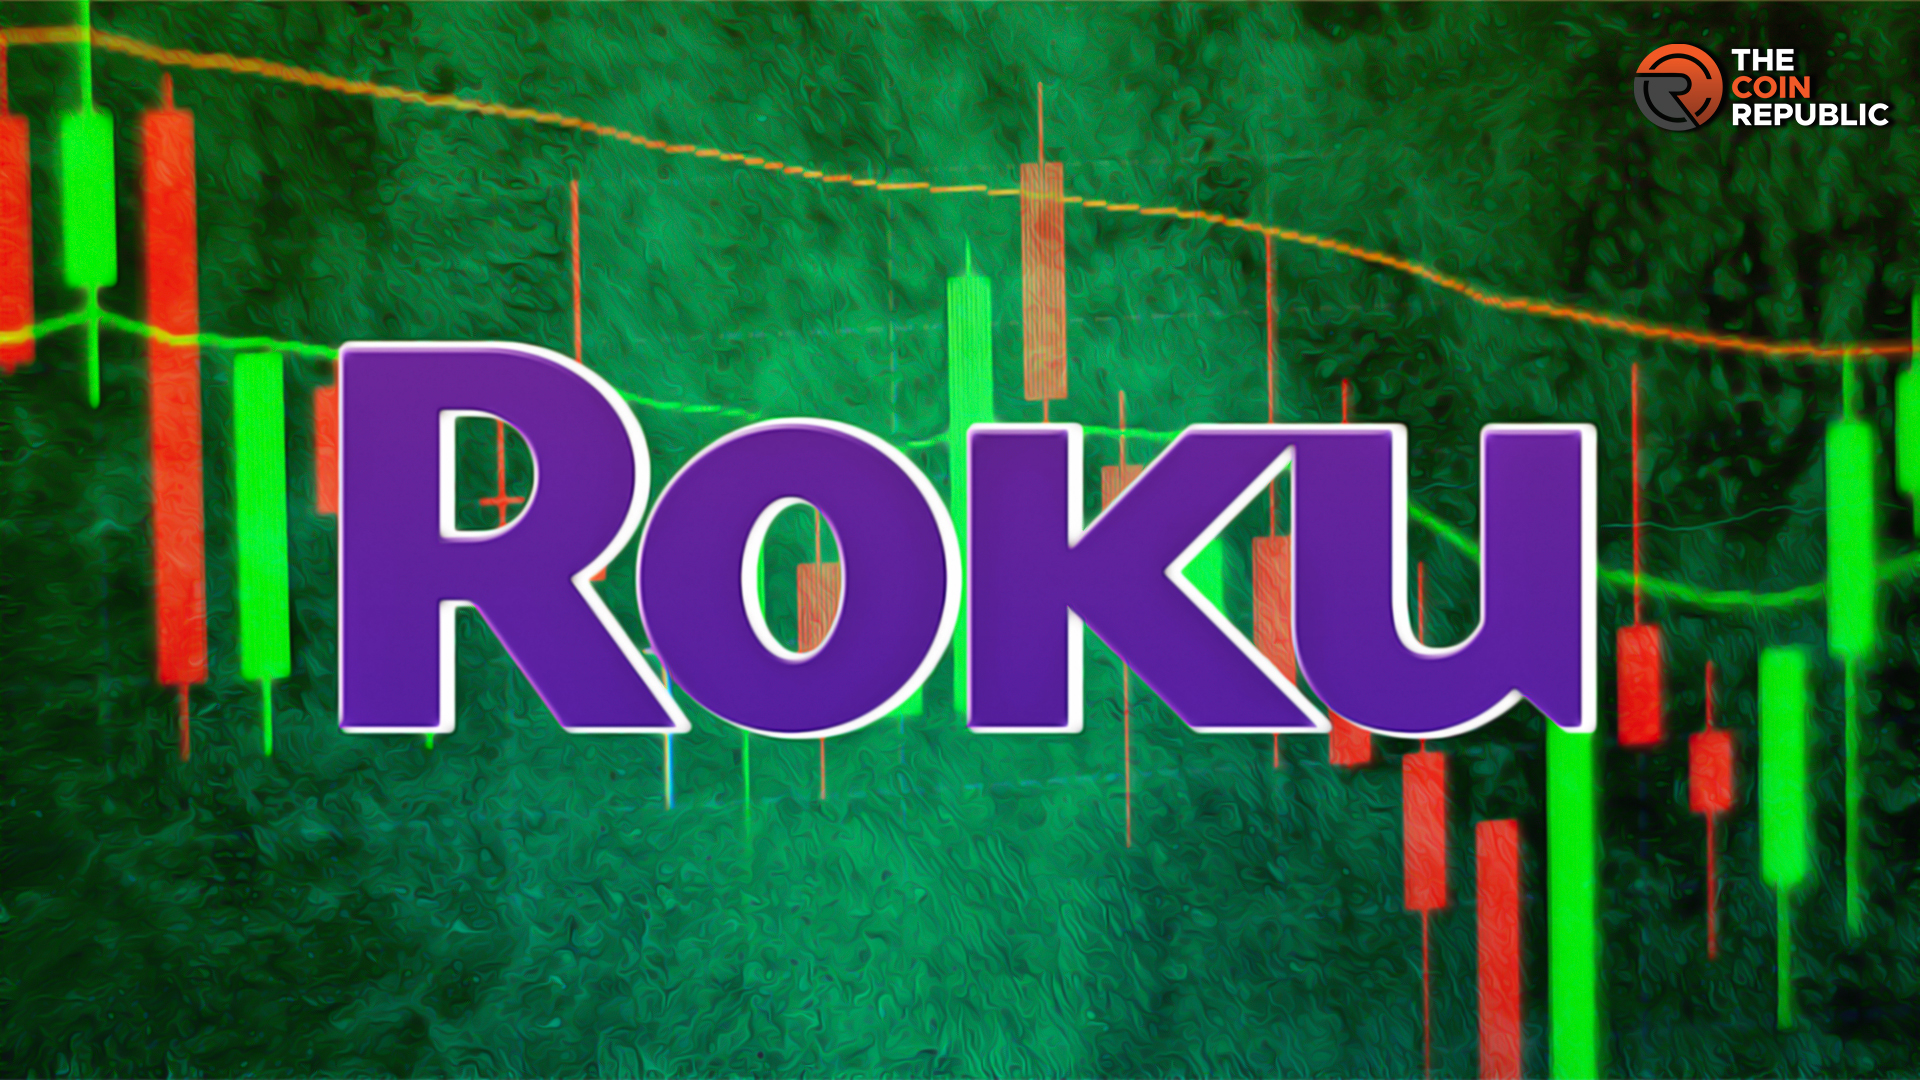 Roku Stock Price: How is Insider Selling Impacting ROKU Price?